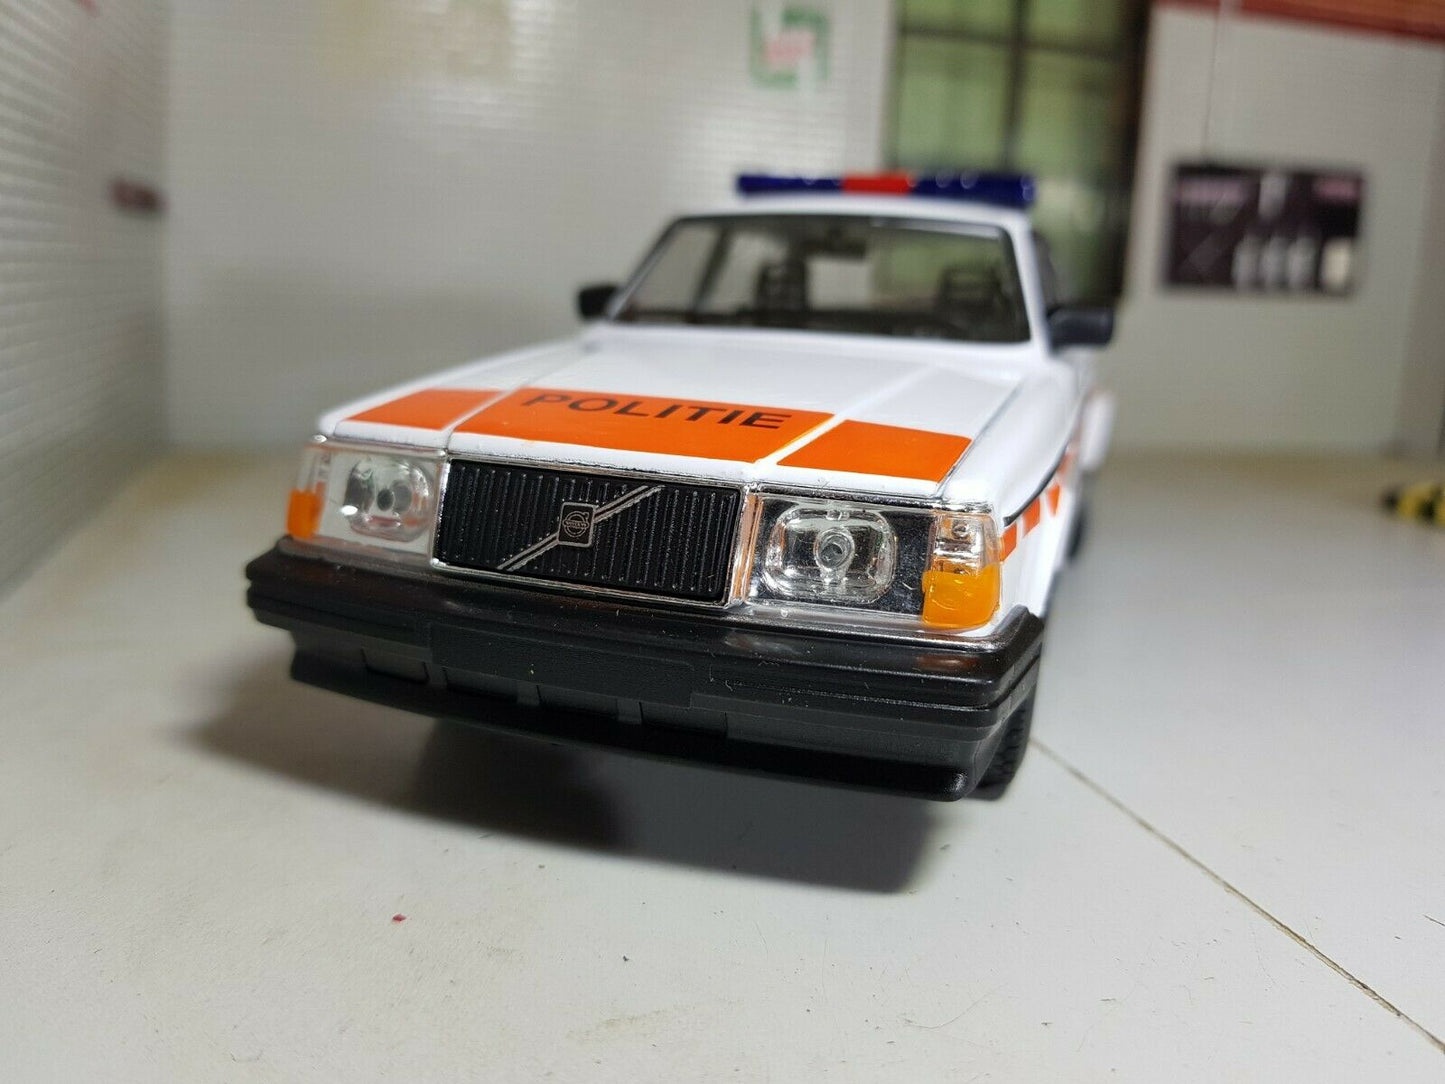 Volvo 1986 240 GL Dutch Police Saloon 24102RS-W Welly 1:24